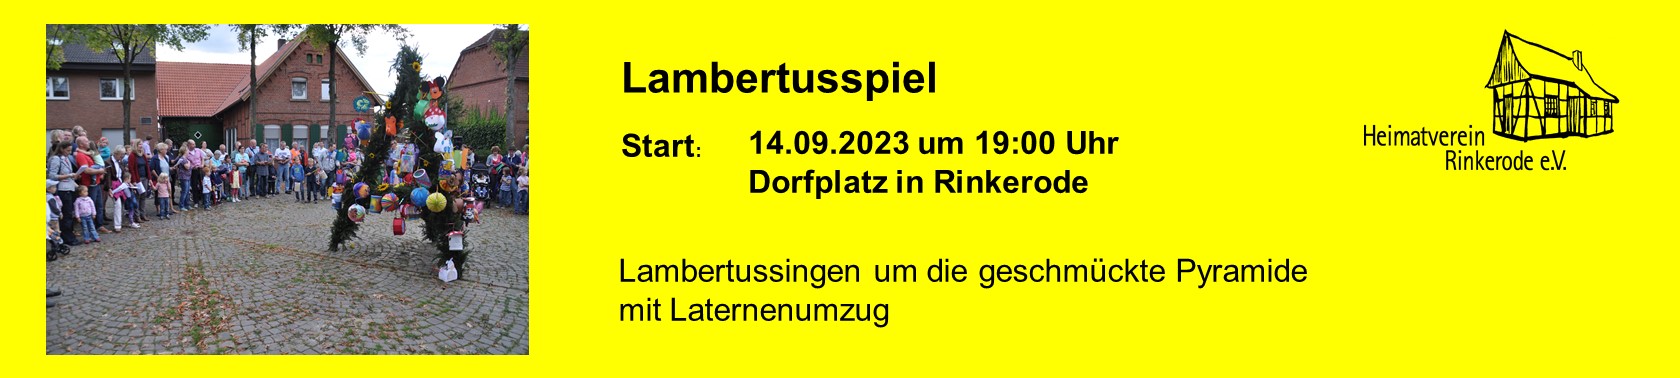 Plakat zum Lambertus-Spiel des Heimatvereins Rinkerode 2023